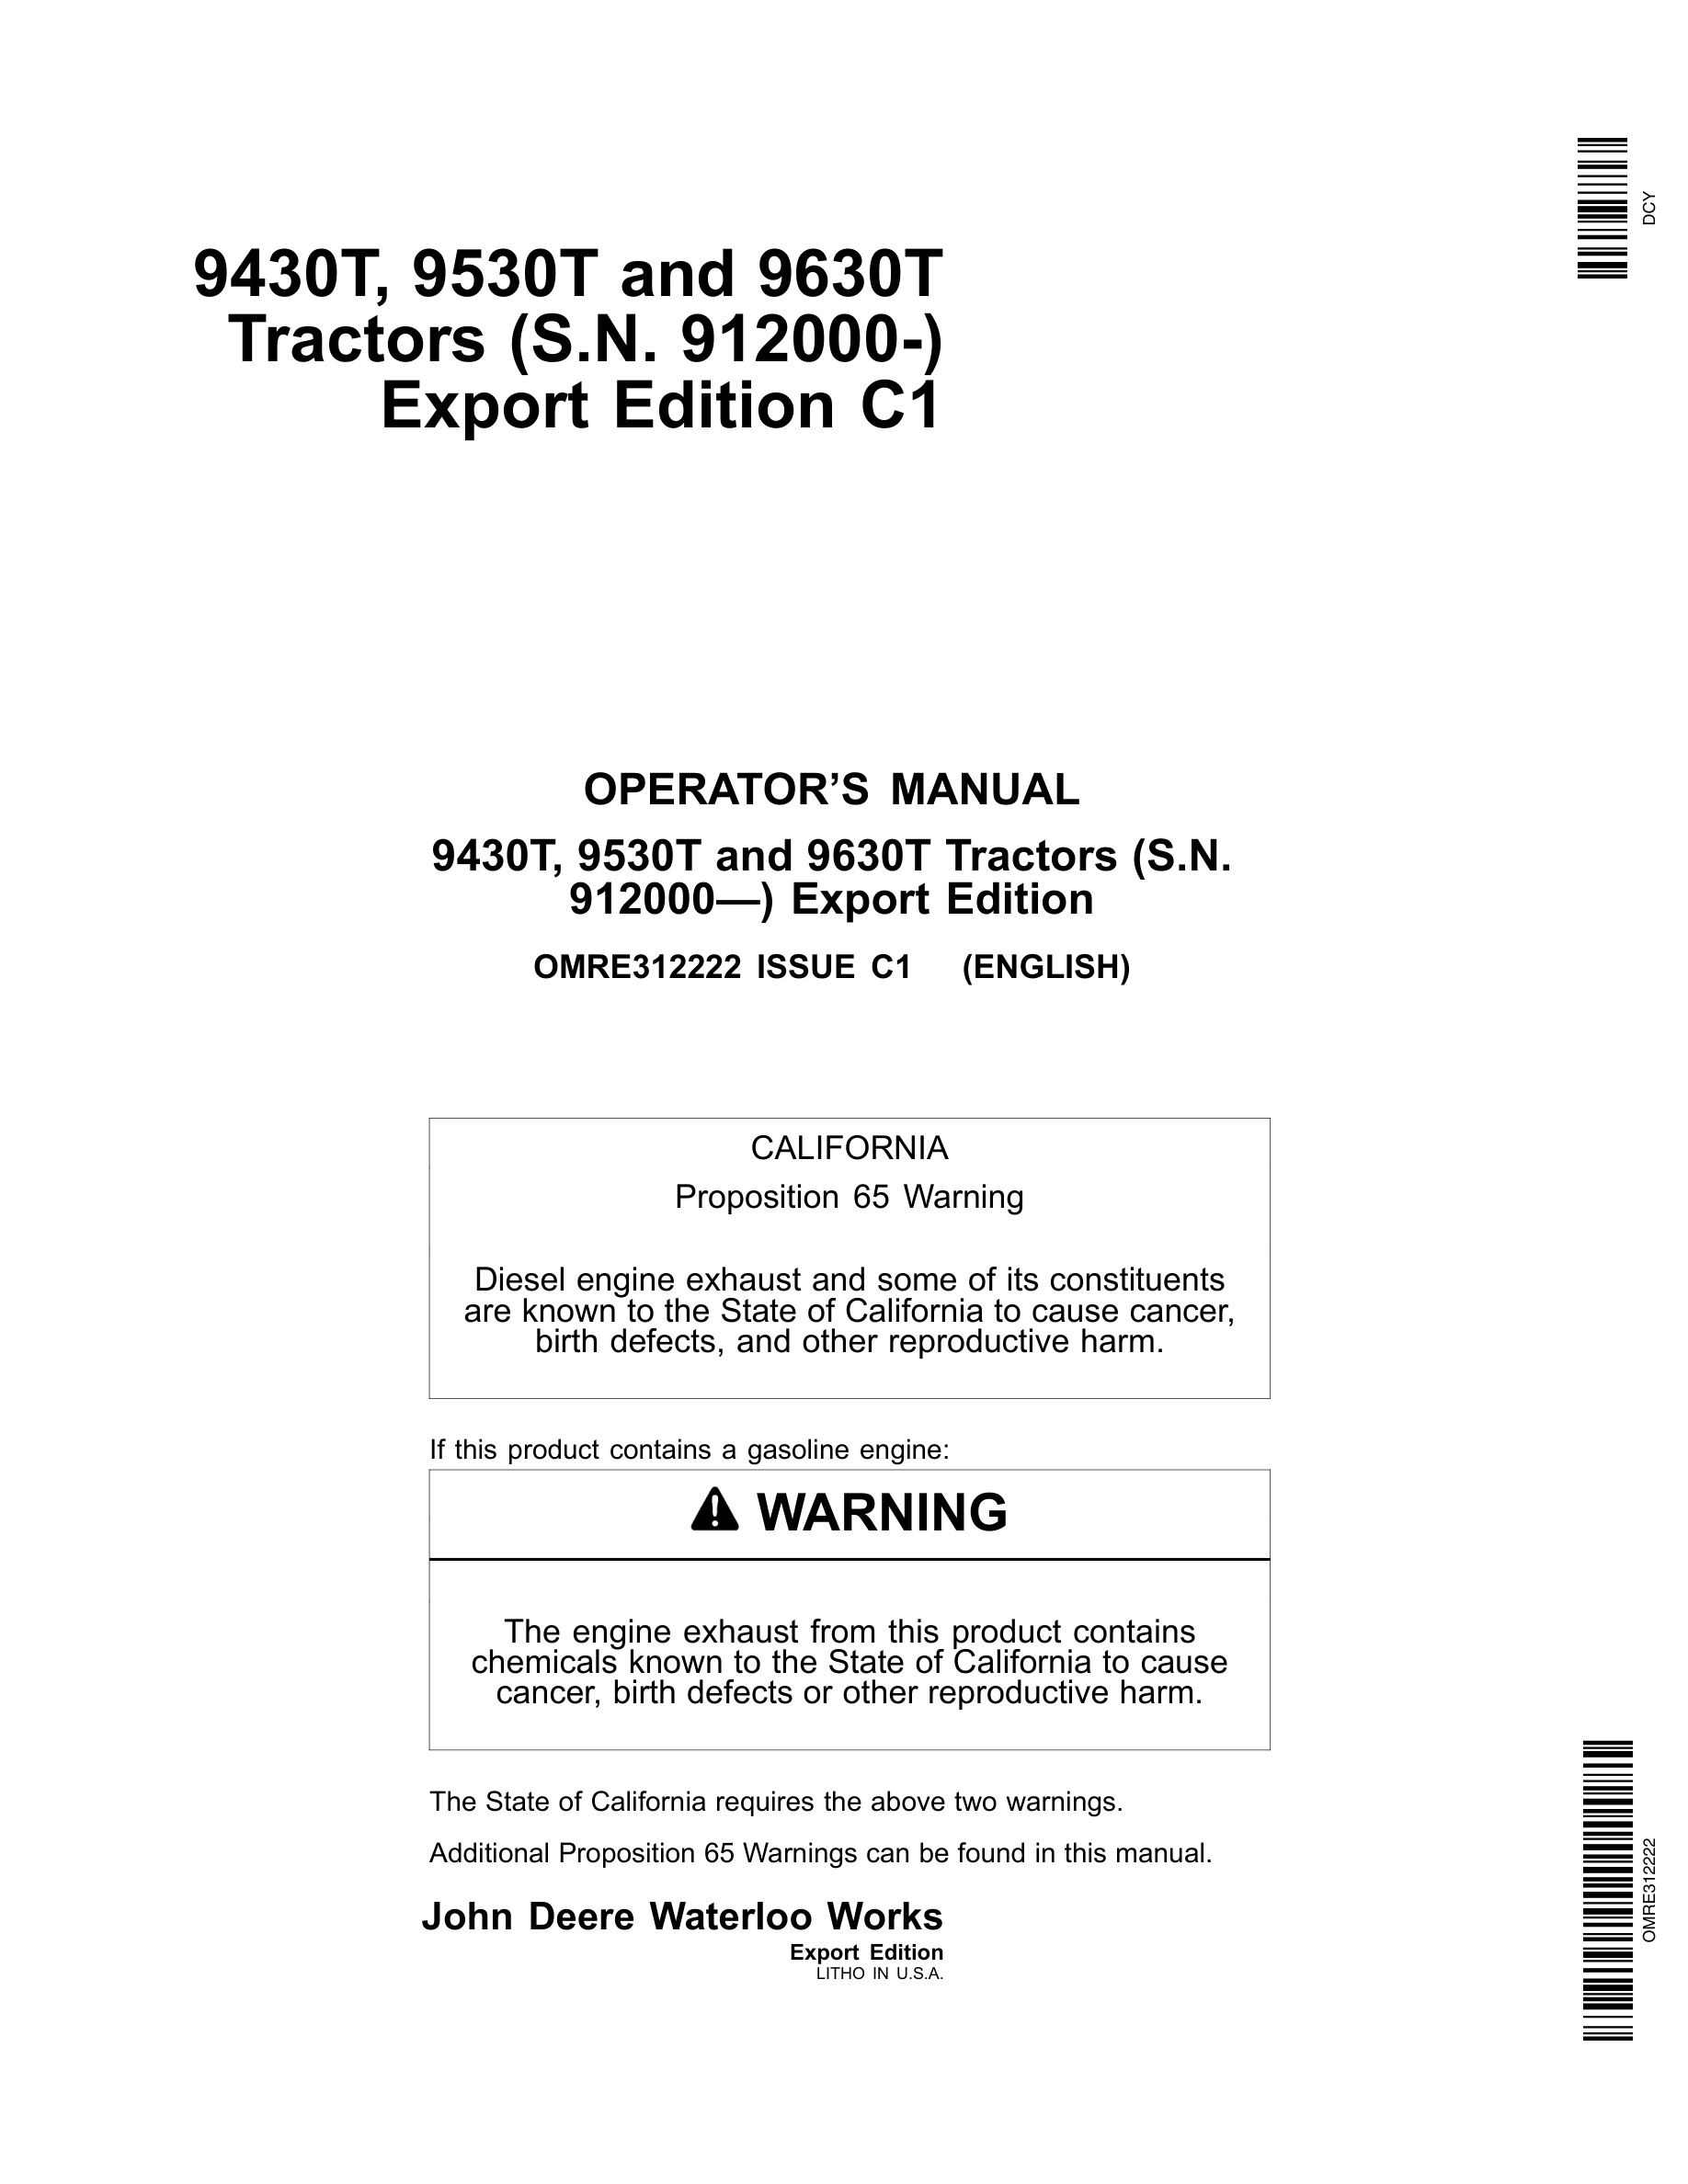 John Deere 9430t, 9530t And 9630t Tractors Operator Manuals OMRE312222-1